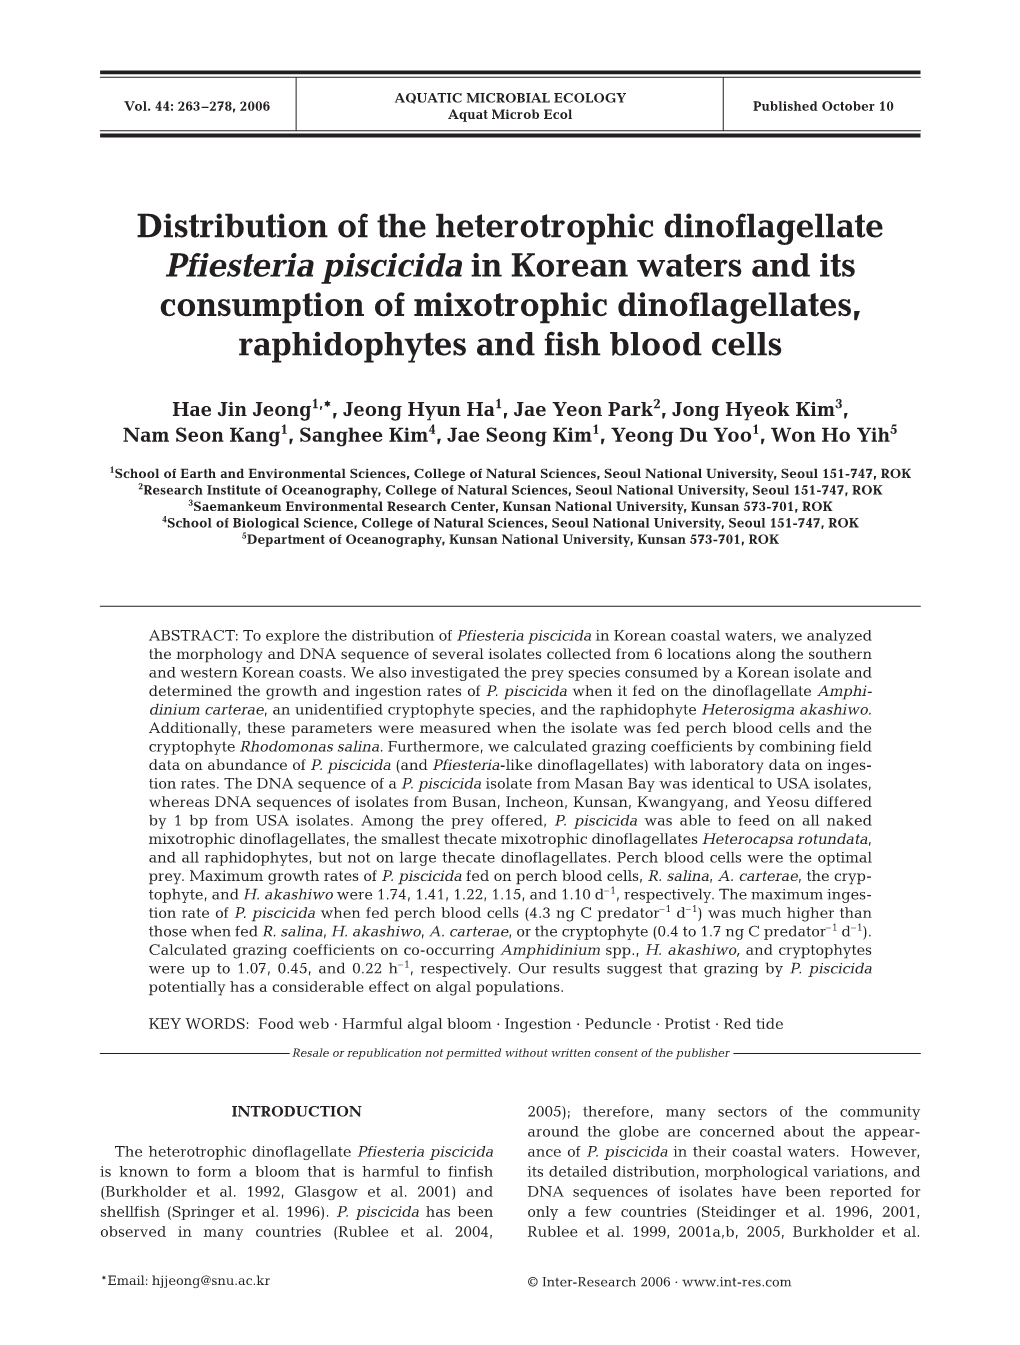 Distribution of the Heterotrophic Dinoflagellate Pfiesteria Piscicida In